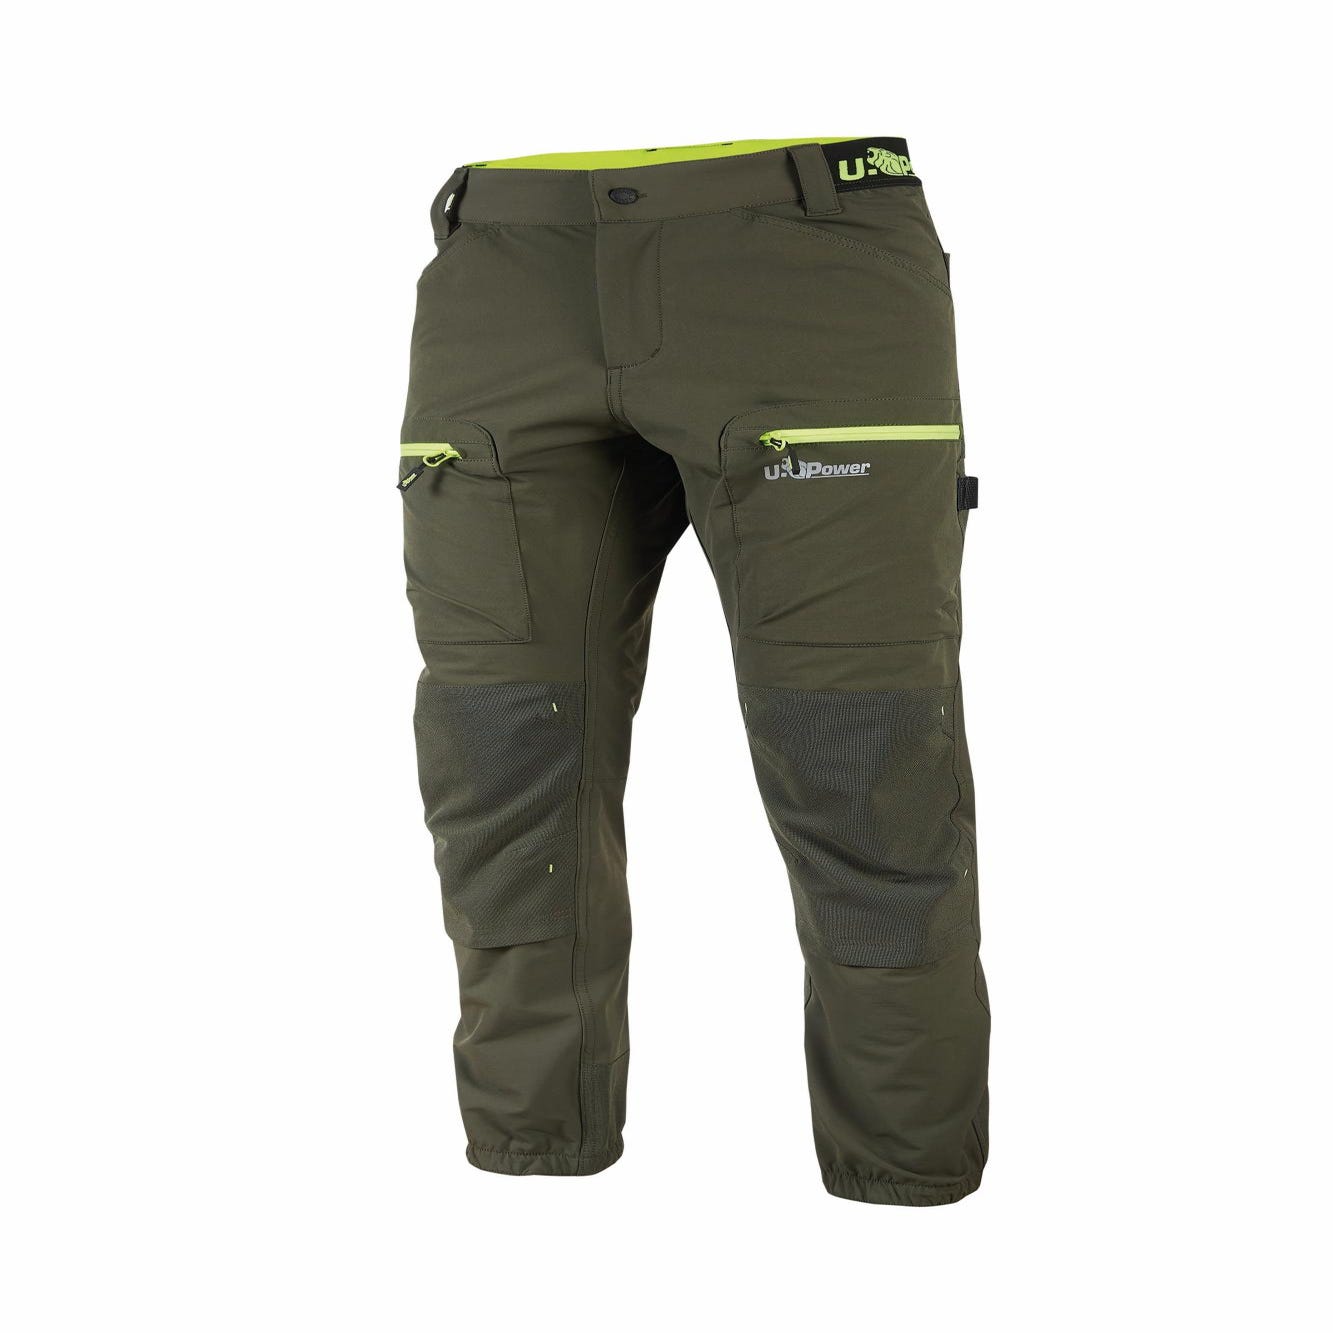 Pantalone da lavoro U-POWER FU267DG verde tg. XL